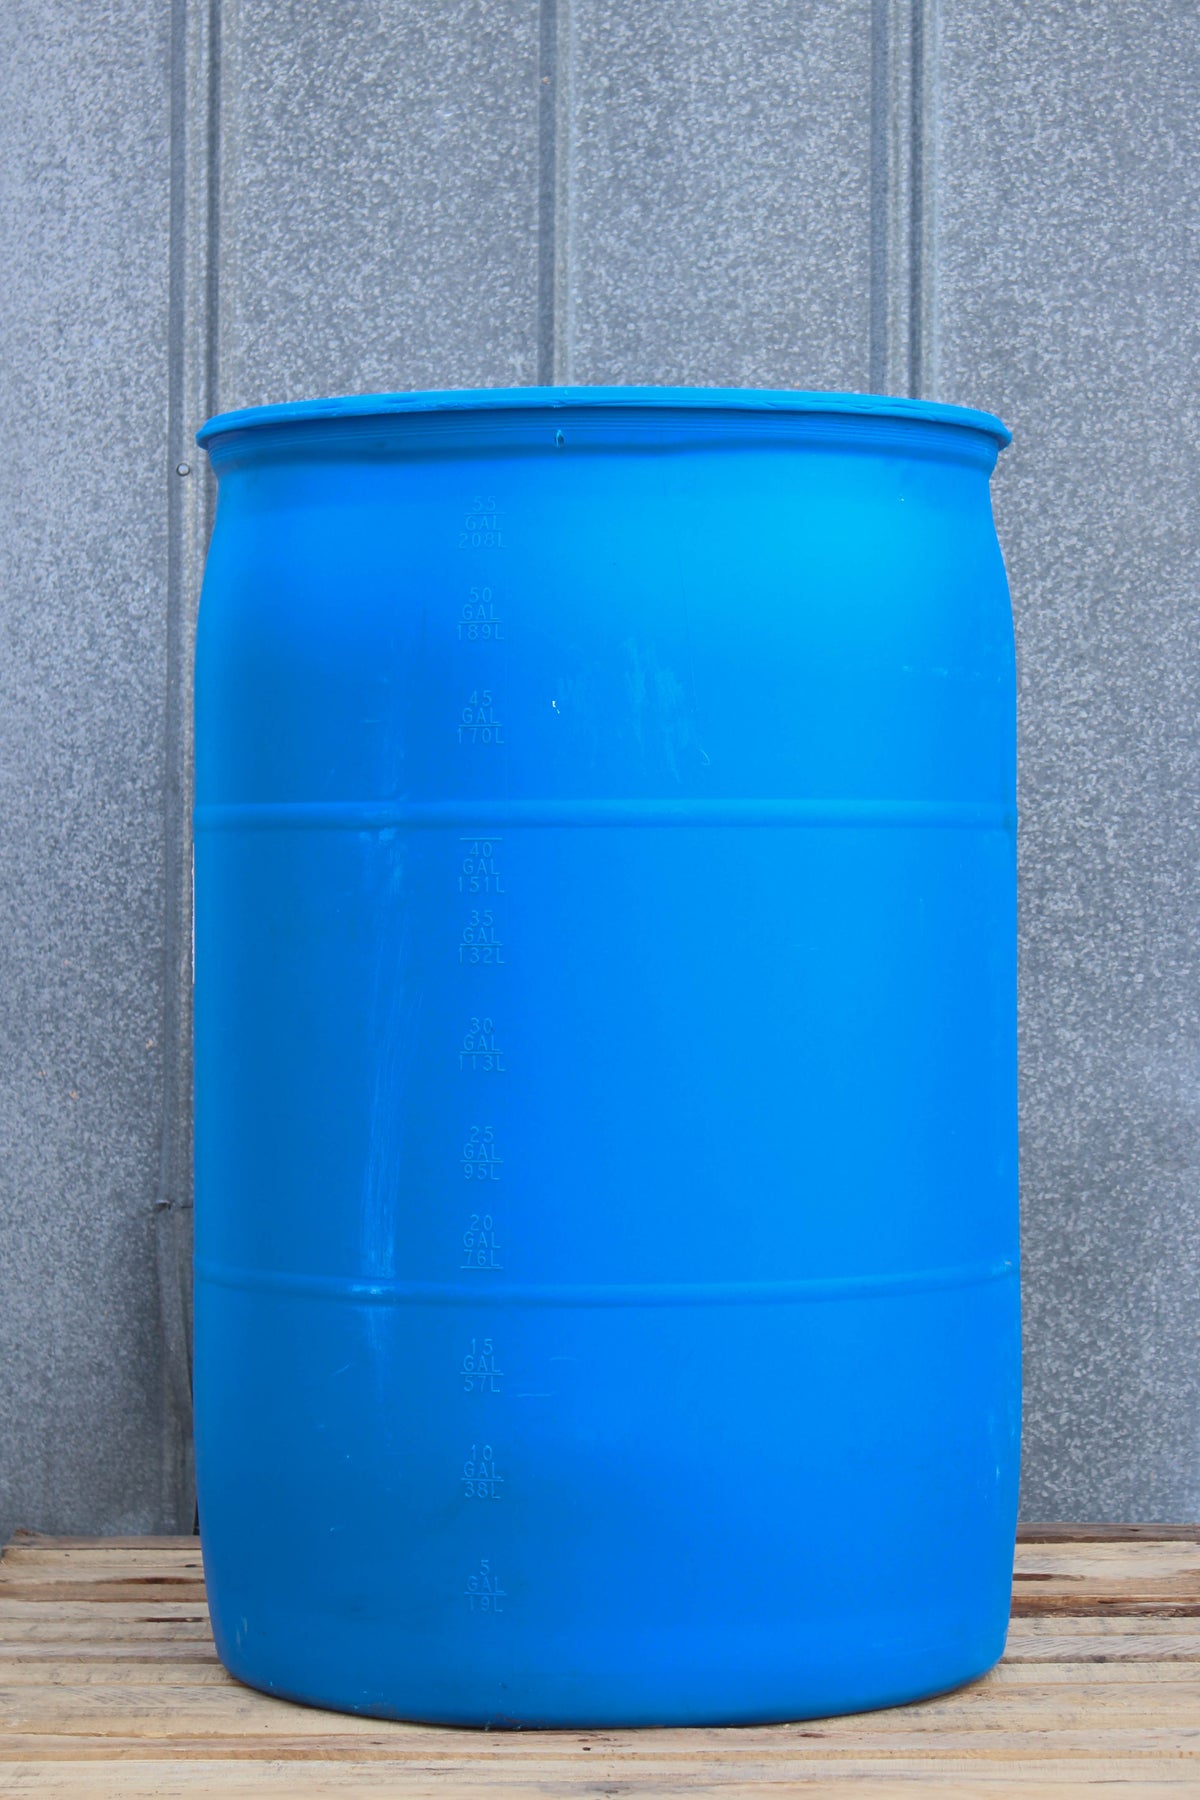 ENSORB Super Absorbent - 55 Gallon Drum